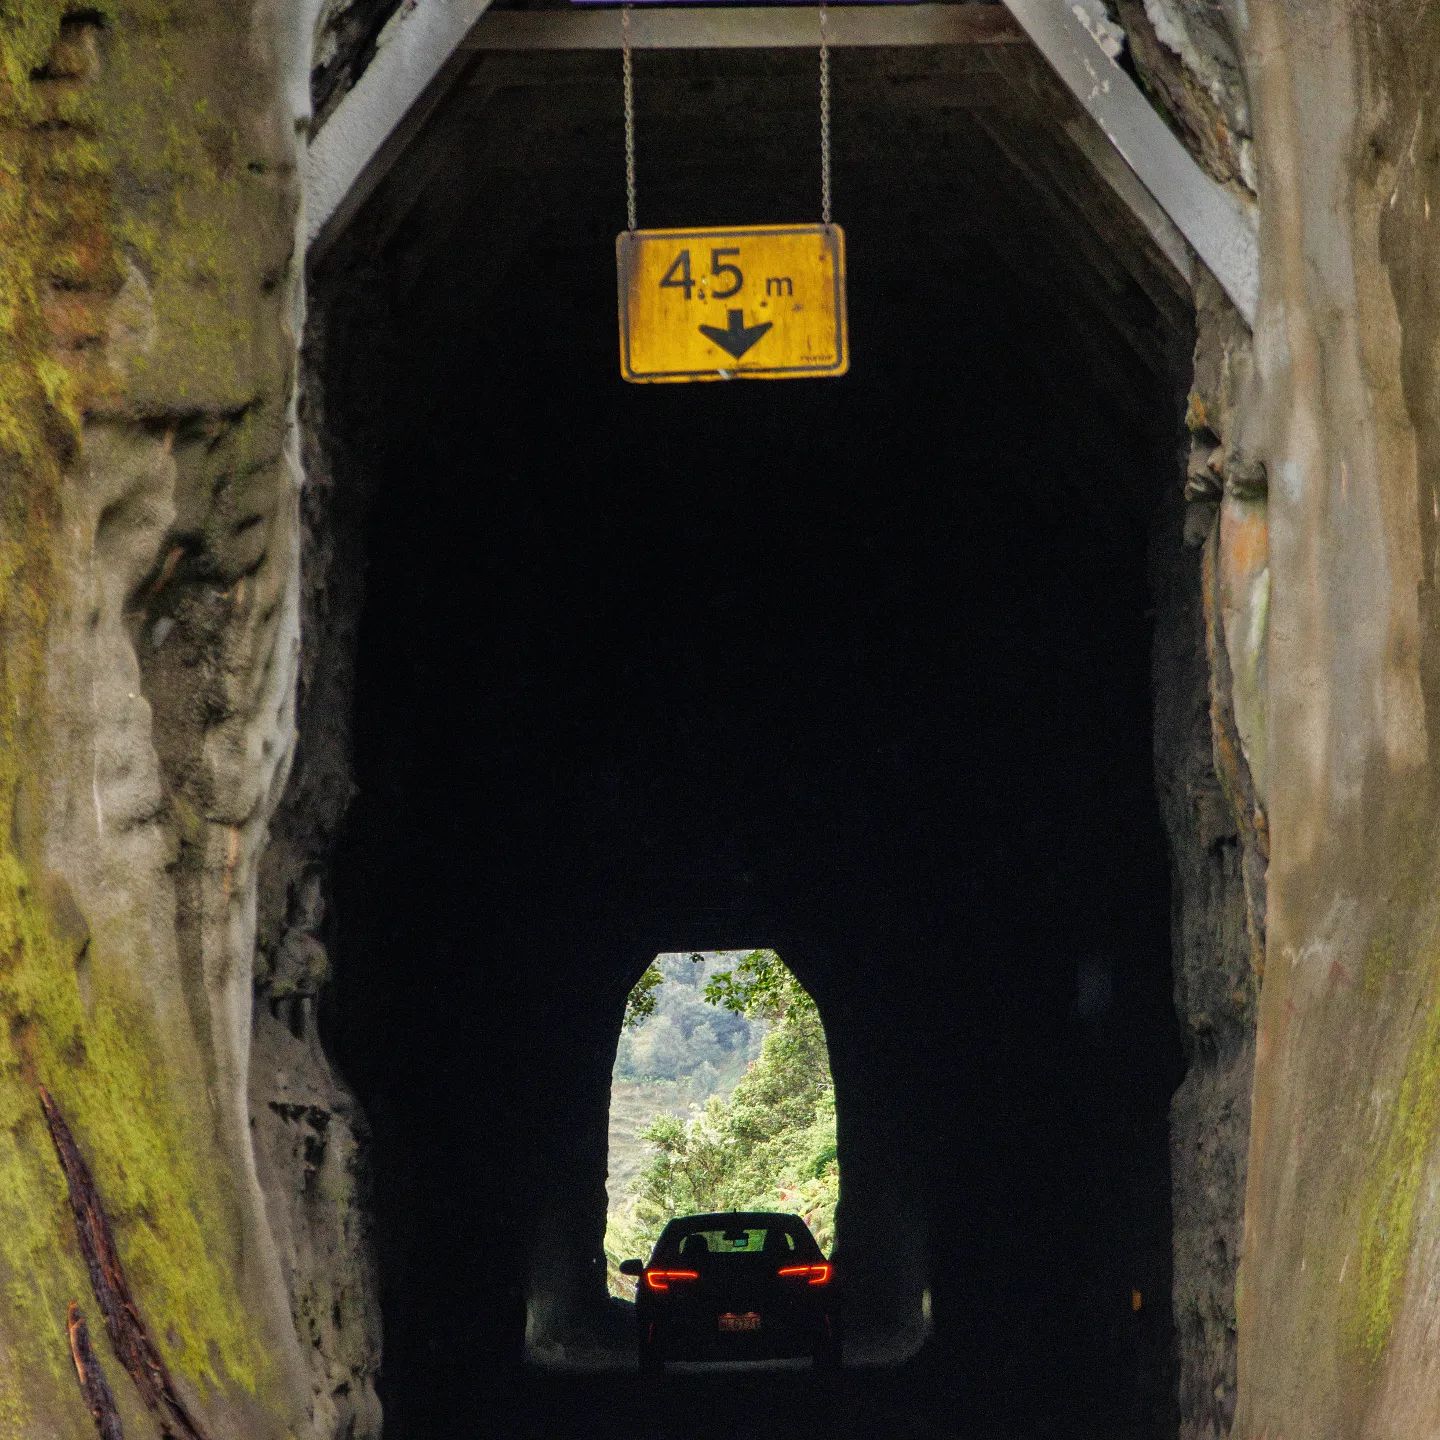 Moki Tunnel, forgotten world highway